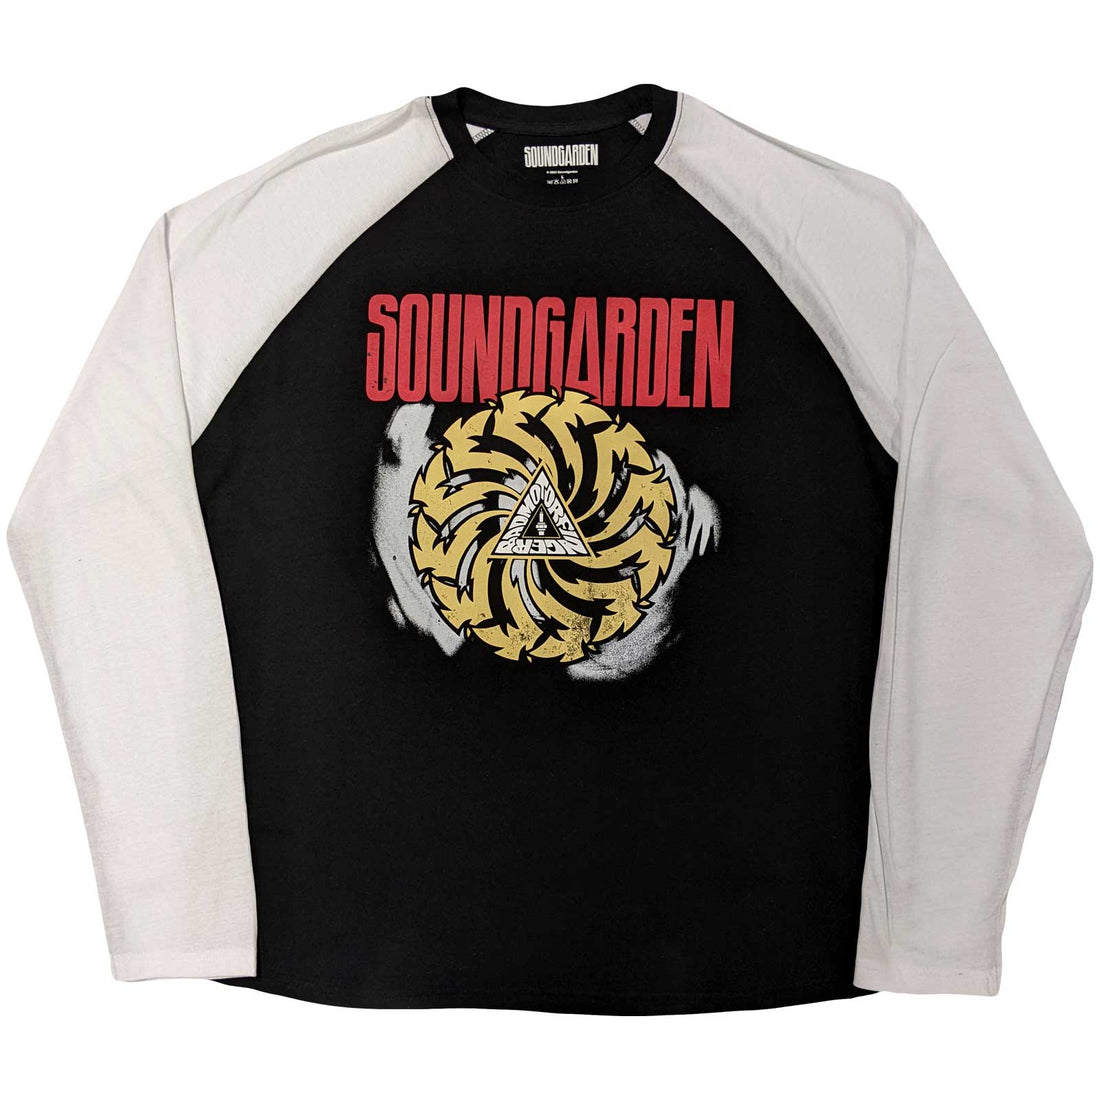 Soundgarden Unisex Raglan T-Shirt: Tour 2017 (Back Print)